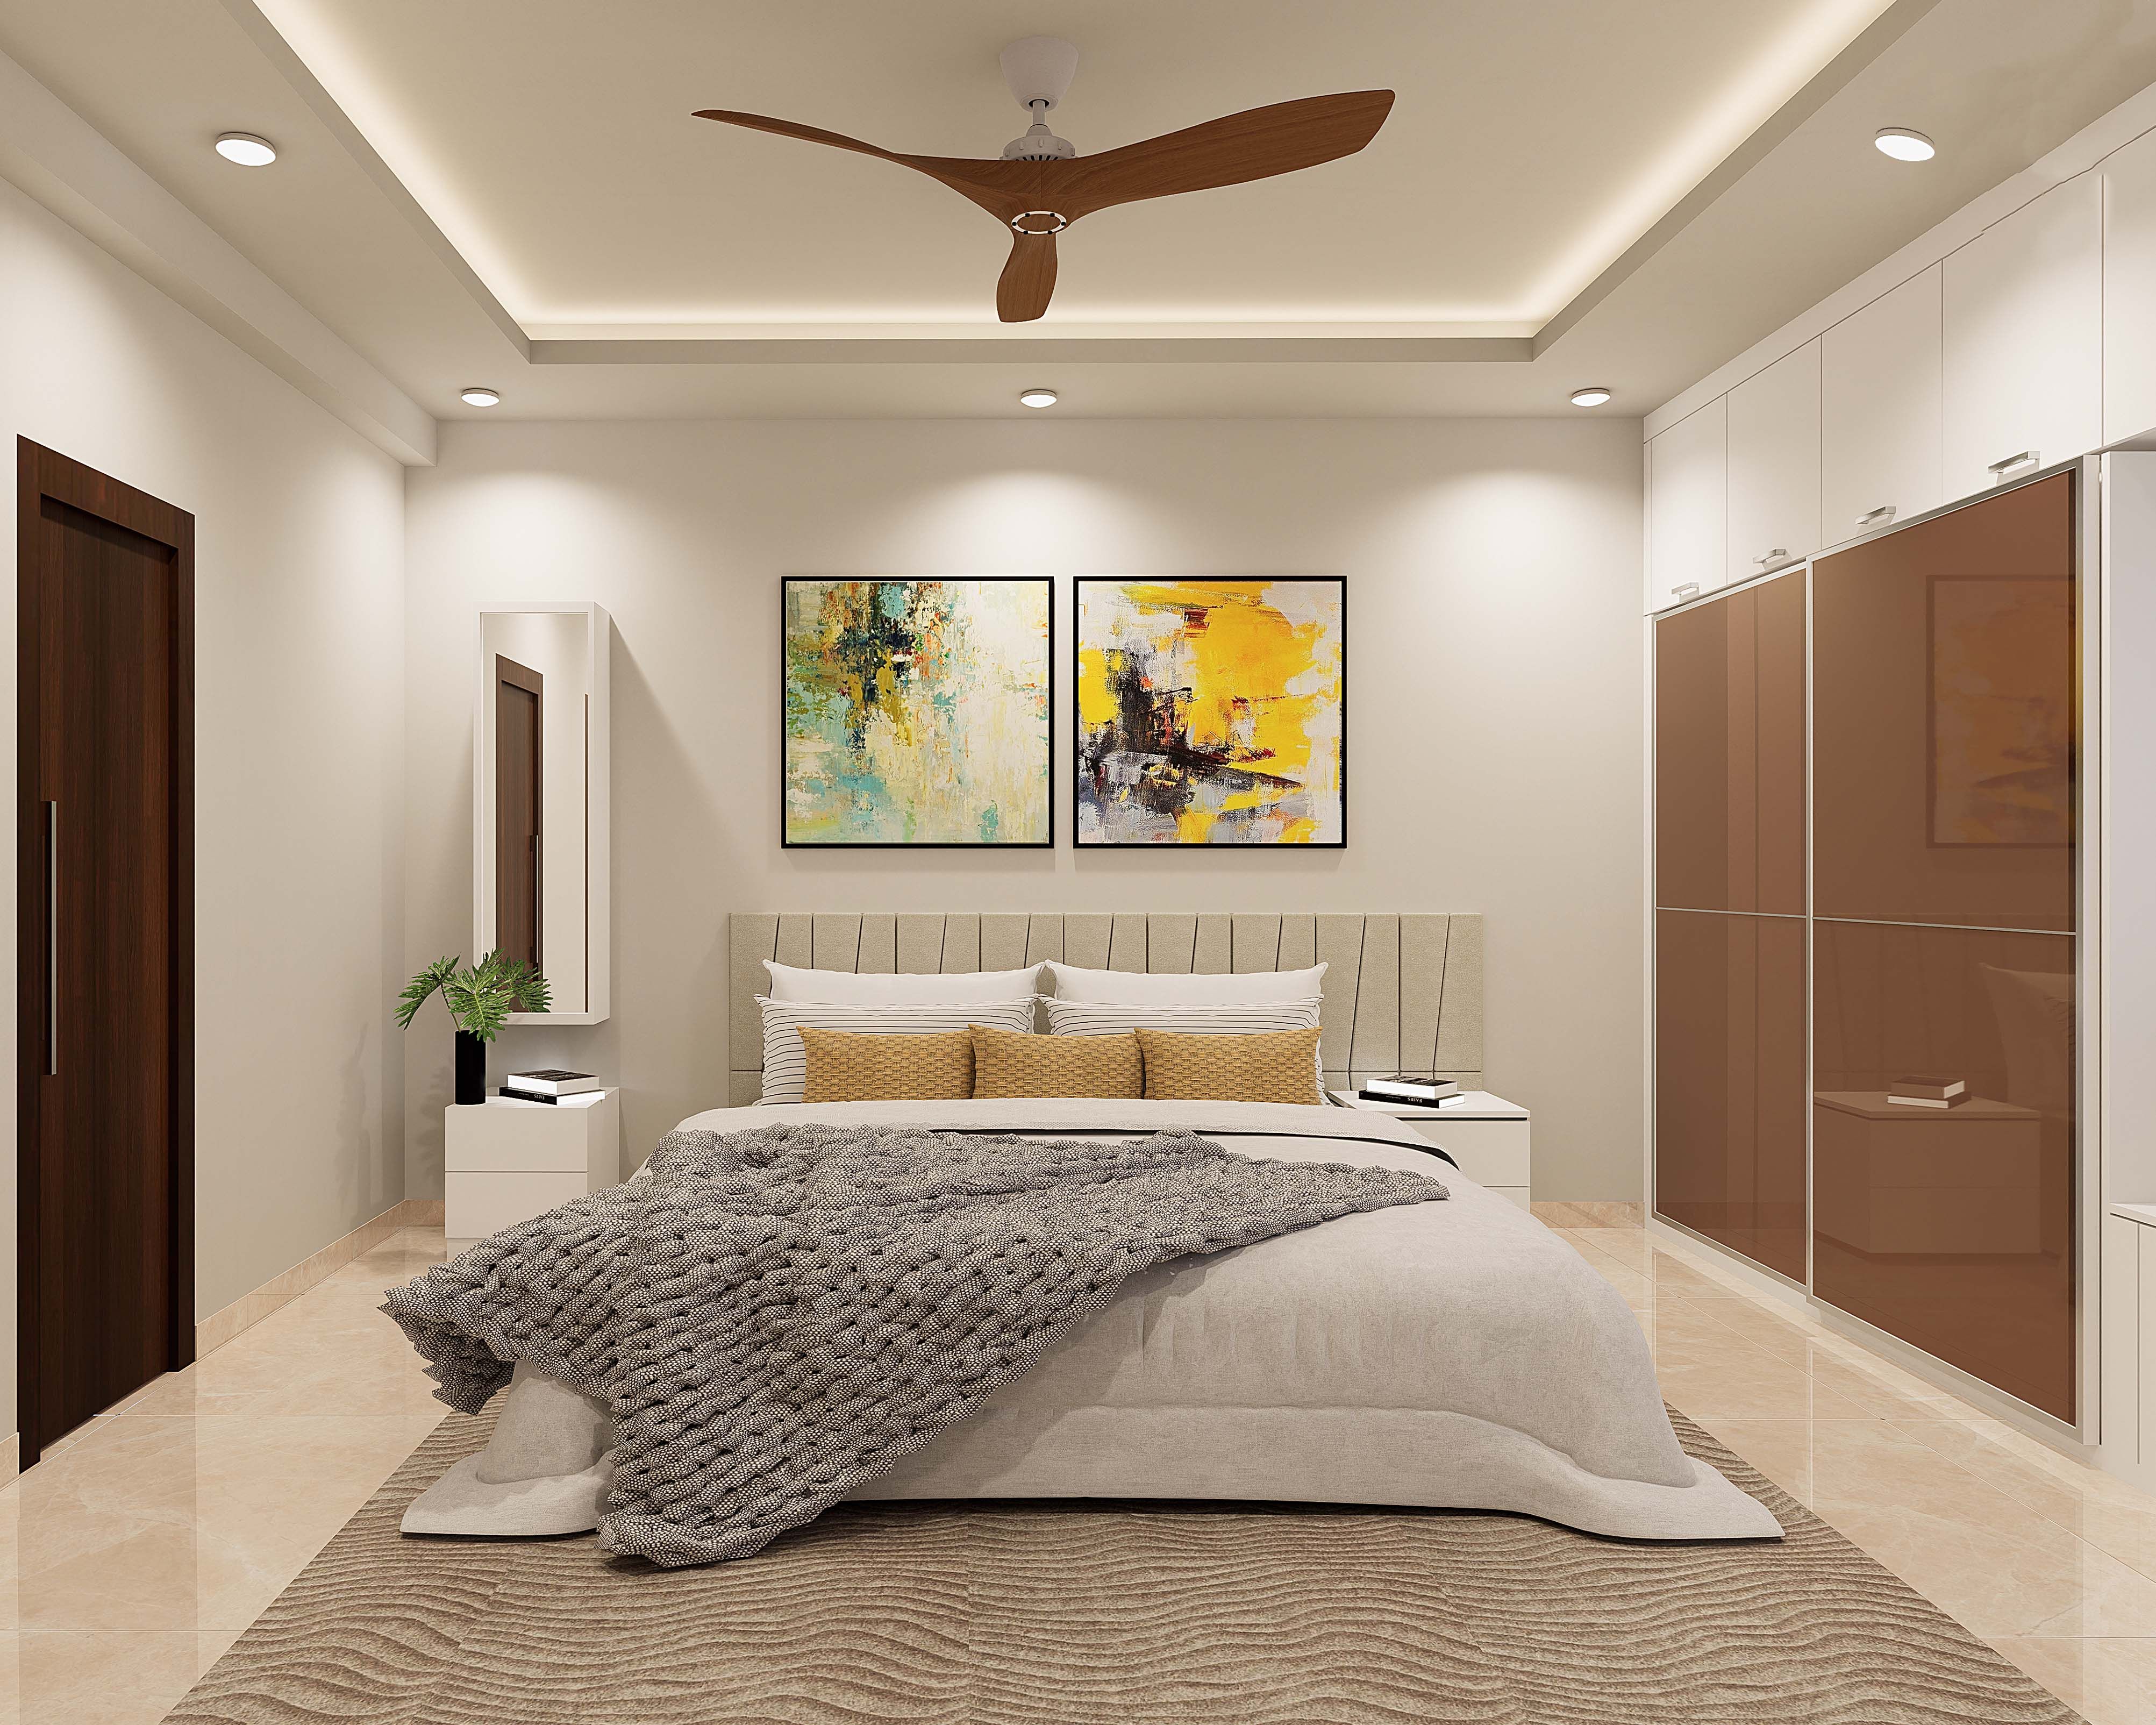 46+ Cool Bedroom Interior Design Ideas With Luxury Touch | Luxurious  bedrooms, Luxury interior design, Luxury bedroom design